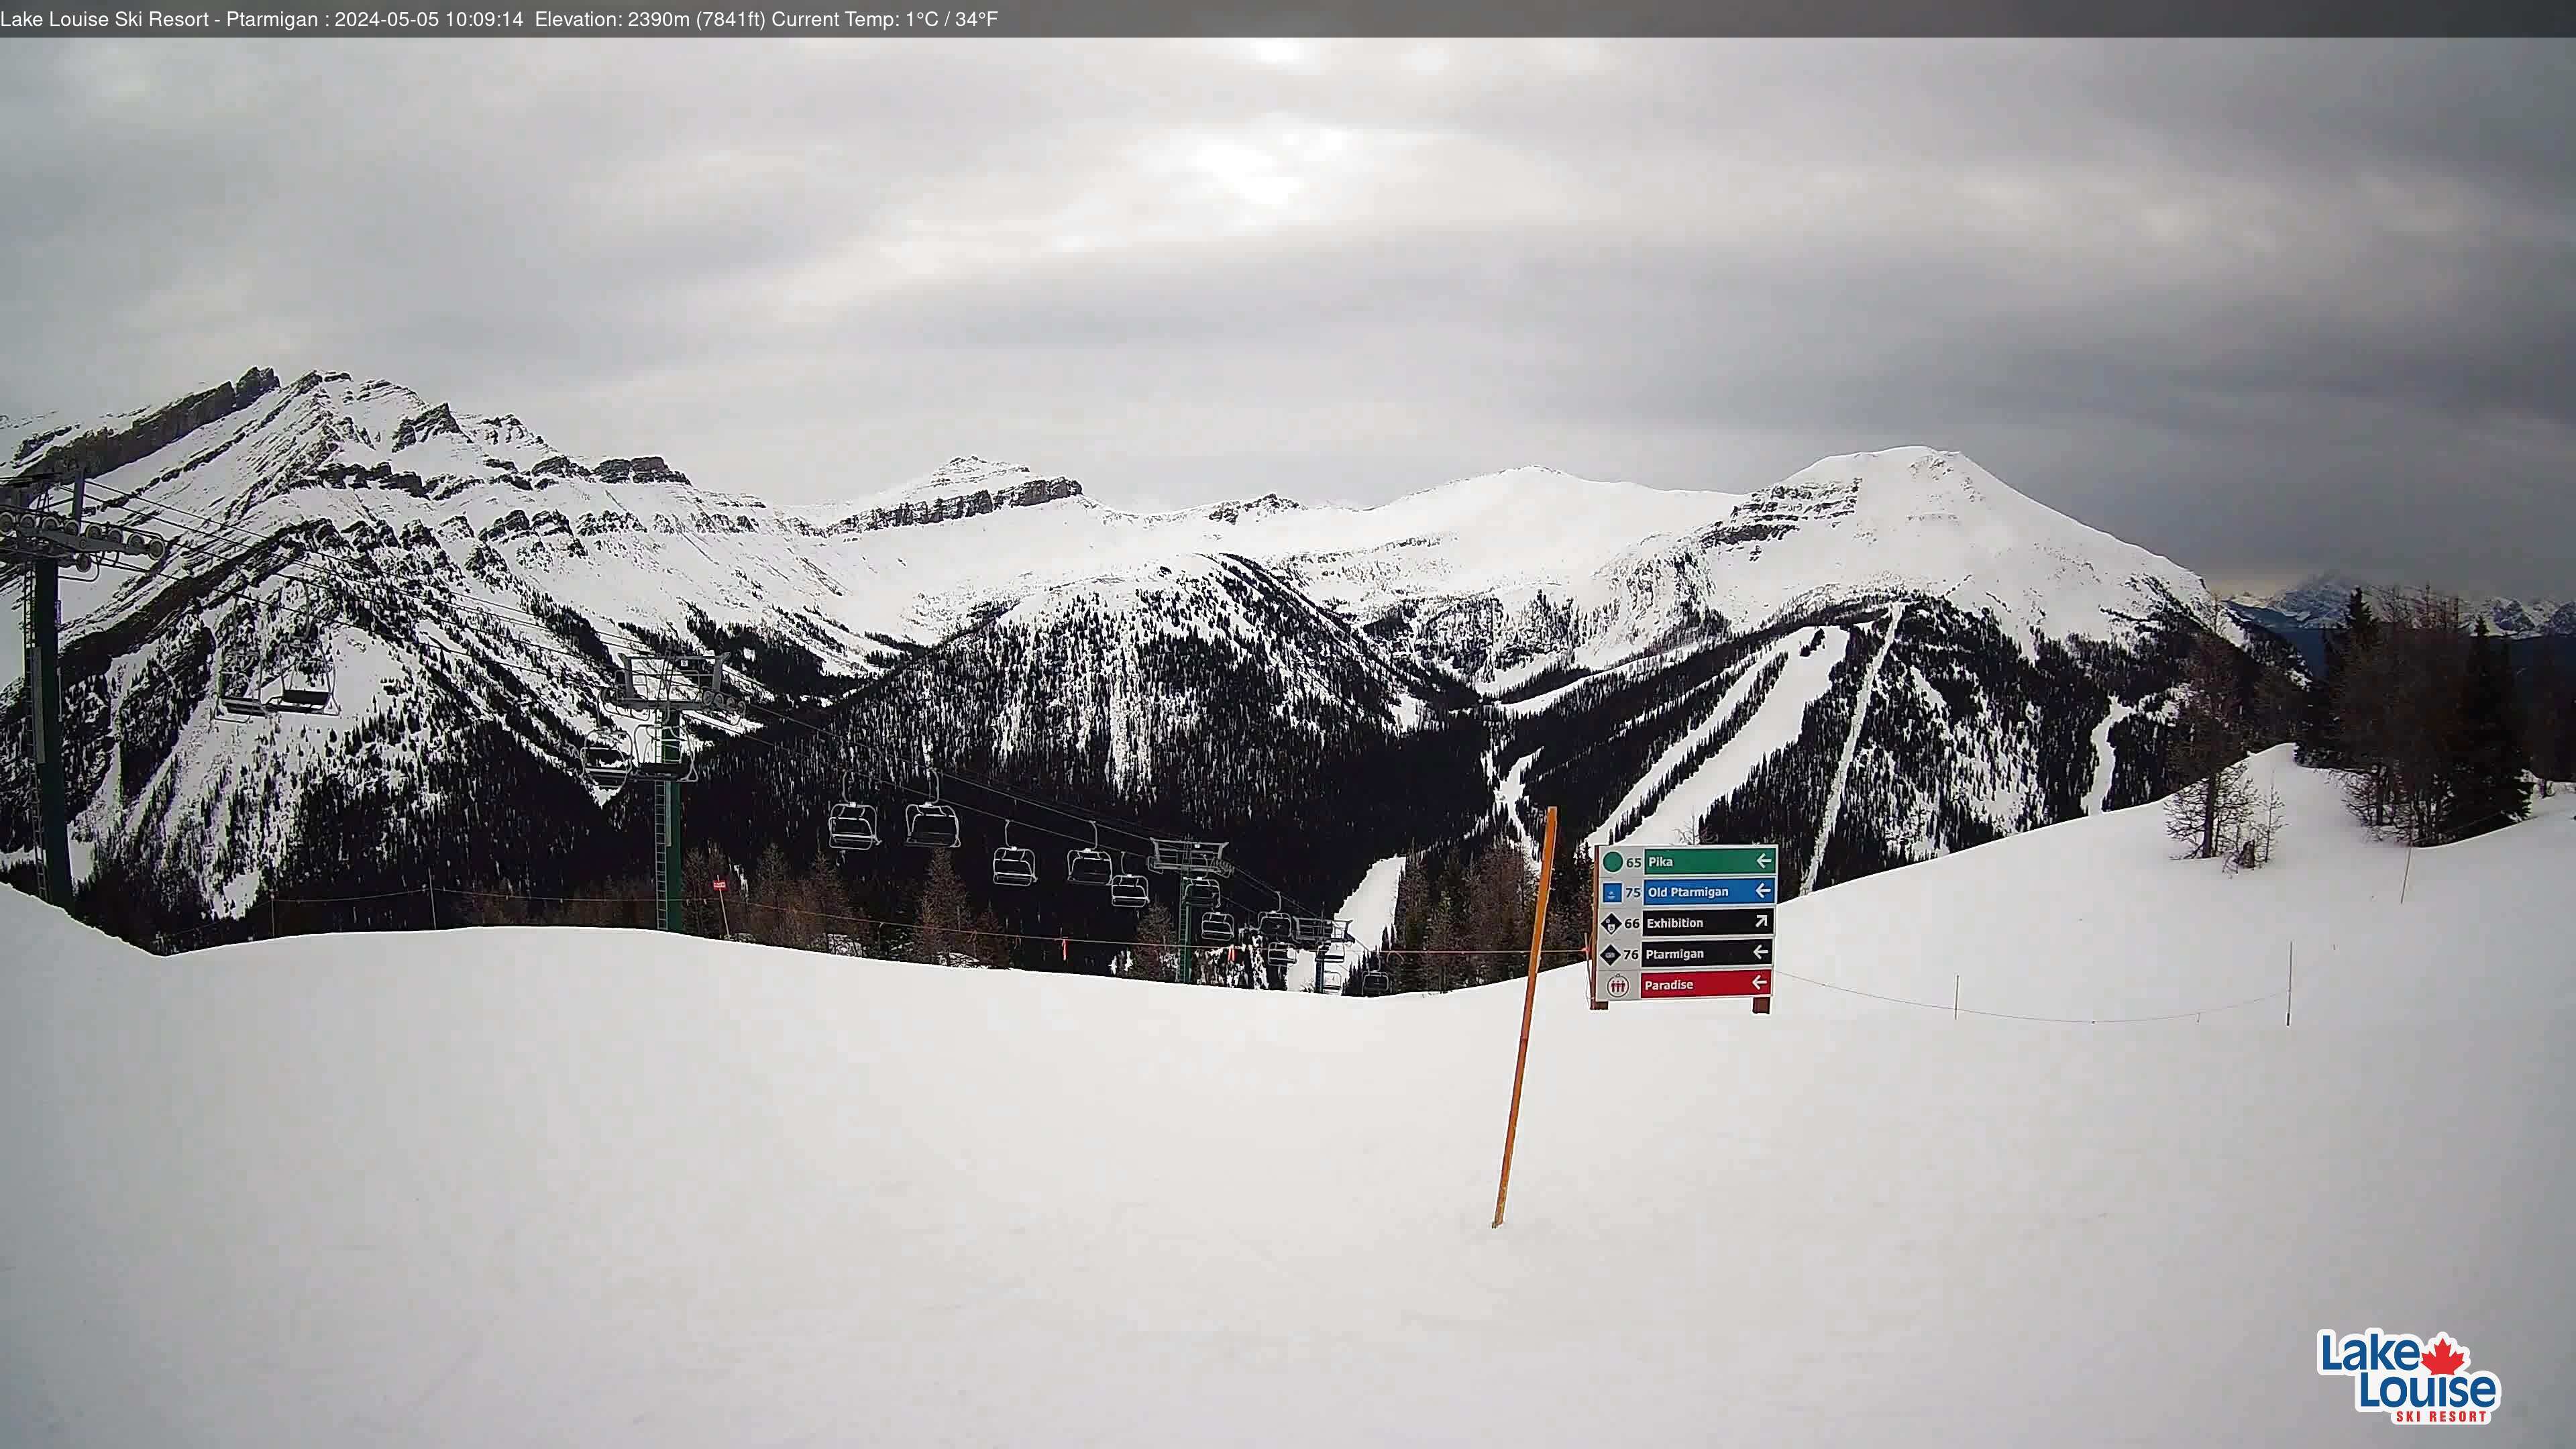 Giftig platform Monet Webcams | The Lake Louise Ski Resort & Summer Gondola